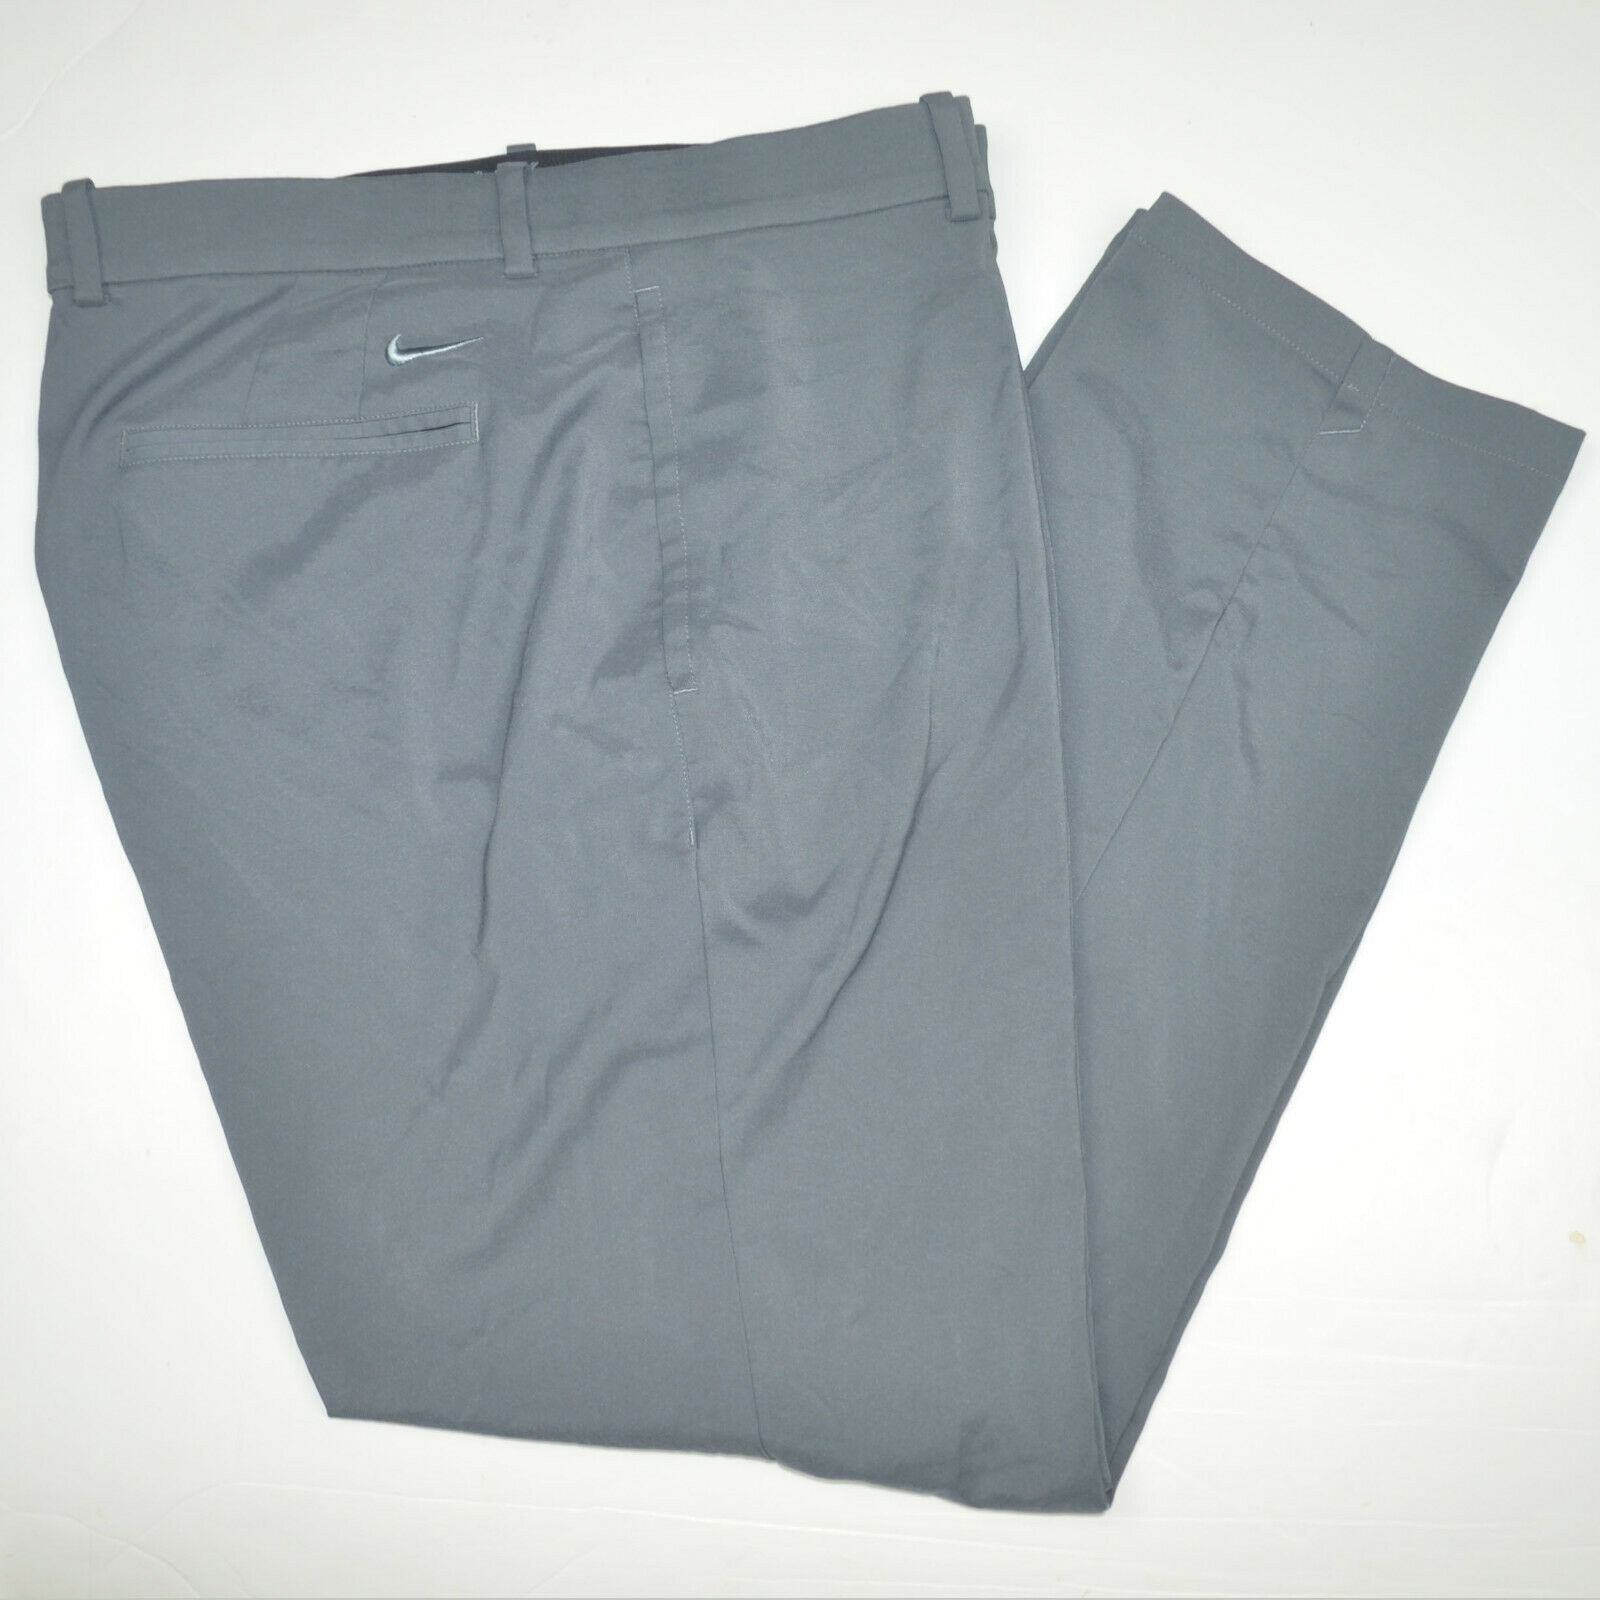 Nike Golf Flex Victory Standard Fit Stretch Flat Front Gray Golf Pants 38 X 30